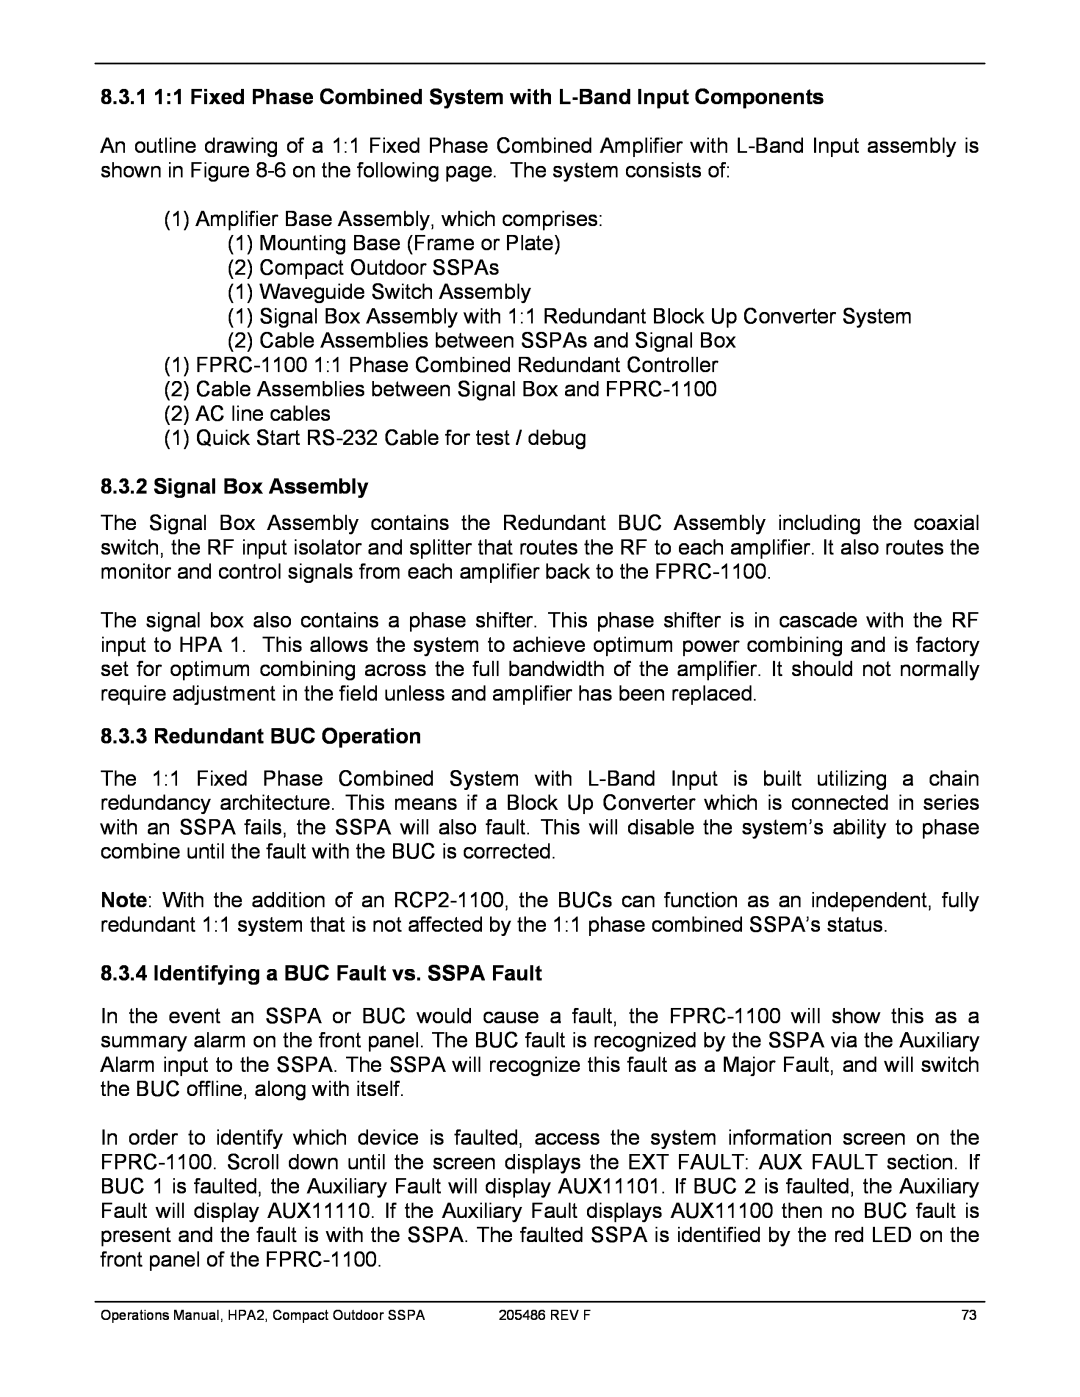 Paradise 205486 REV F manual 8.3.2Signal Box Assembly, Redundant BUC Operation, Identifying a BUC Fault vs. SSPA Fault 